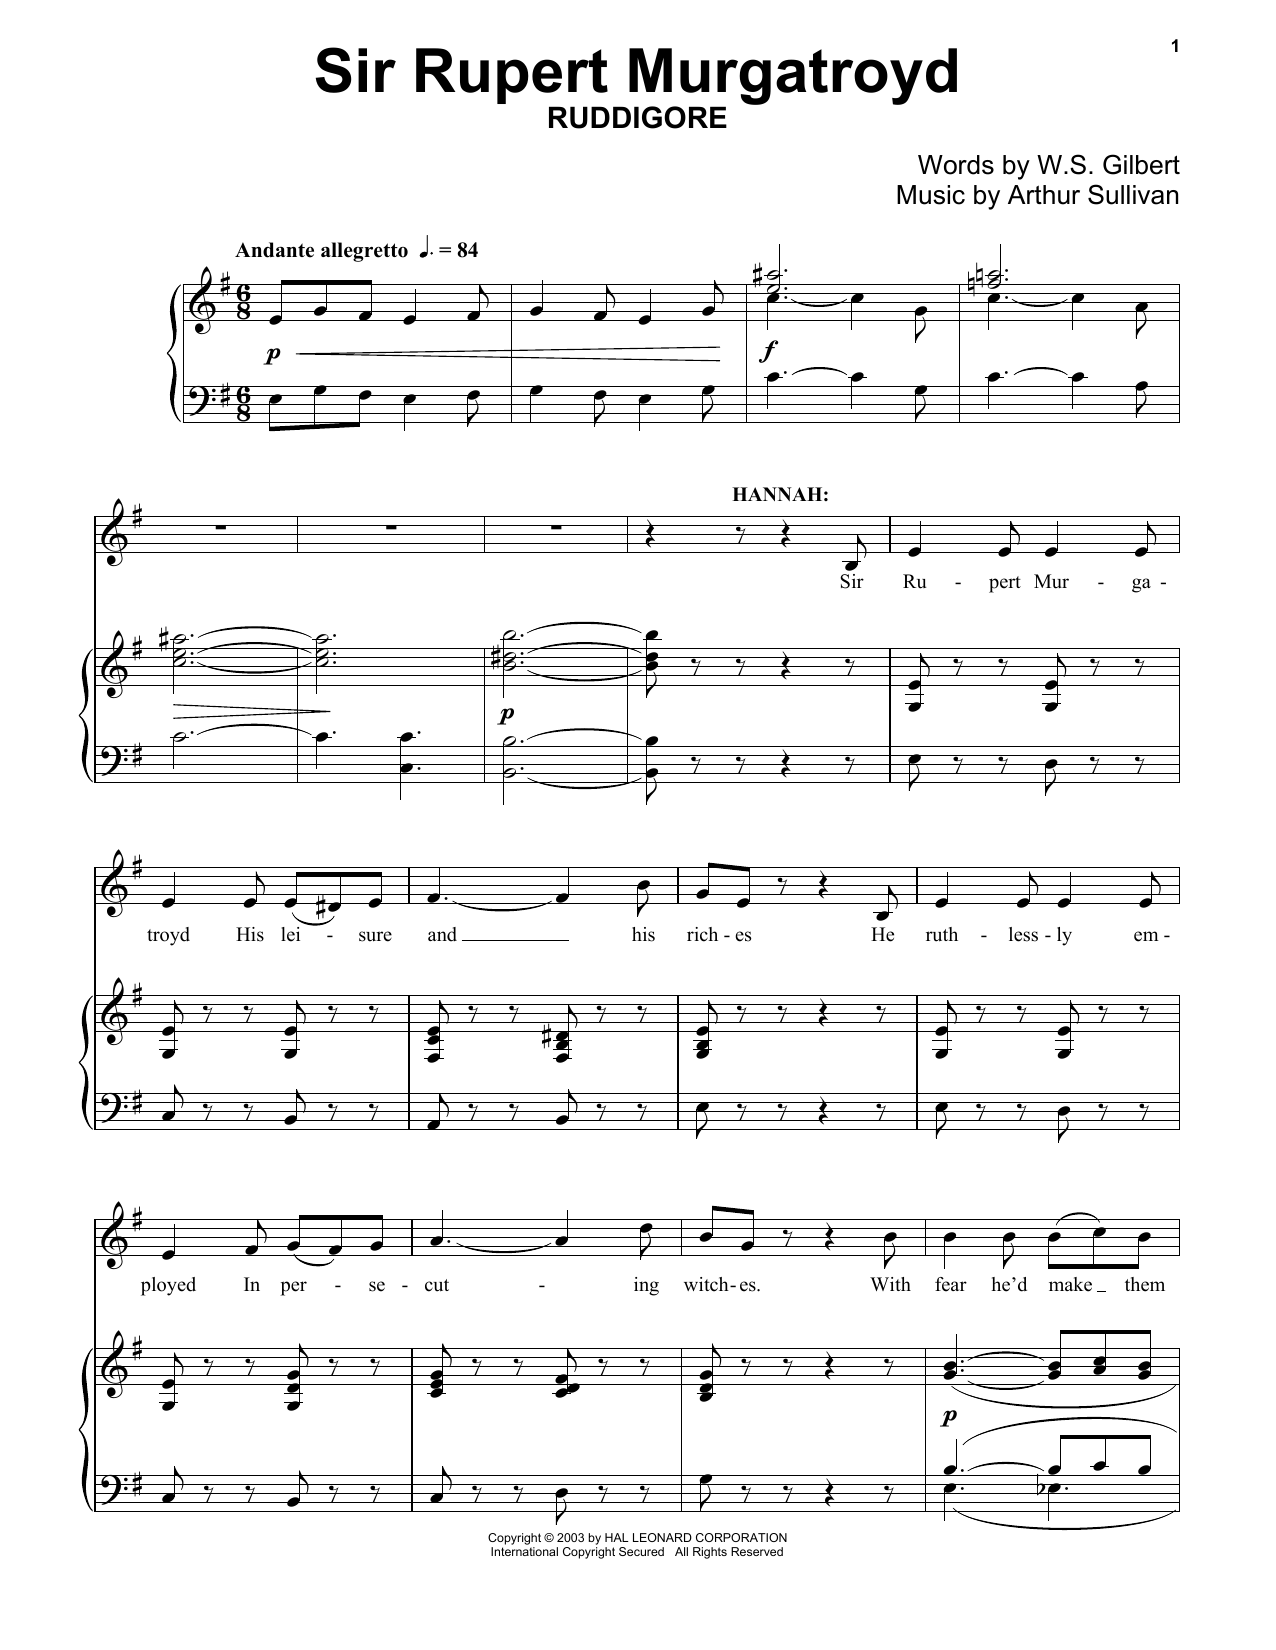 Gilbert & Sullivan Sir Rupert Murgatroyd Sheet Music Notes & Chords for Piano - Download or Print PDF